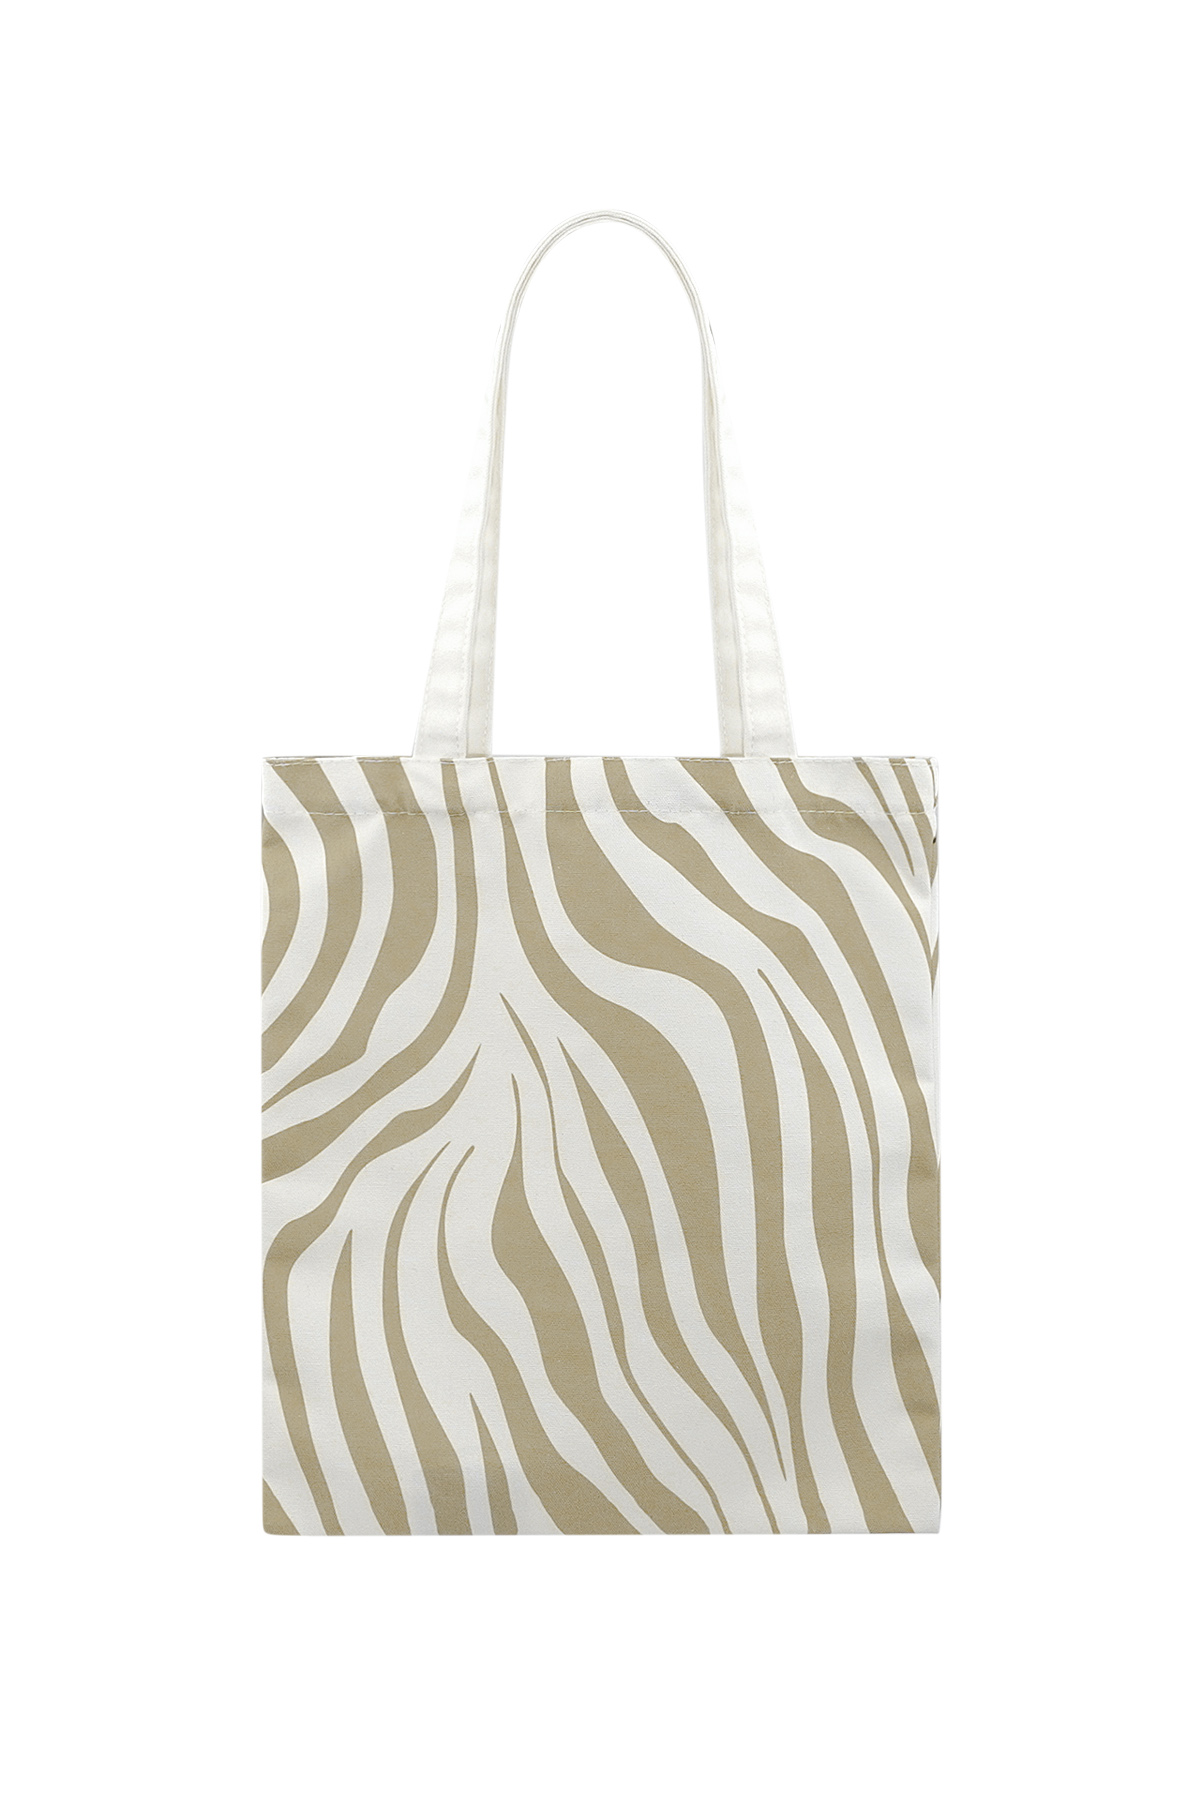 Kanvas shopper zebra desenli - bej h5 Resim4